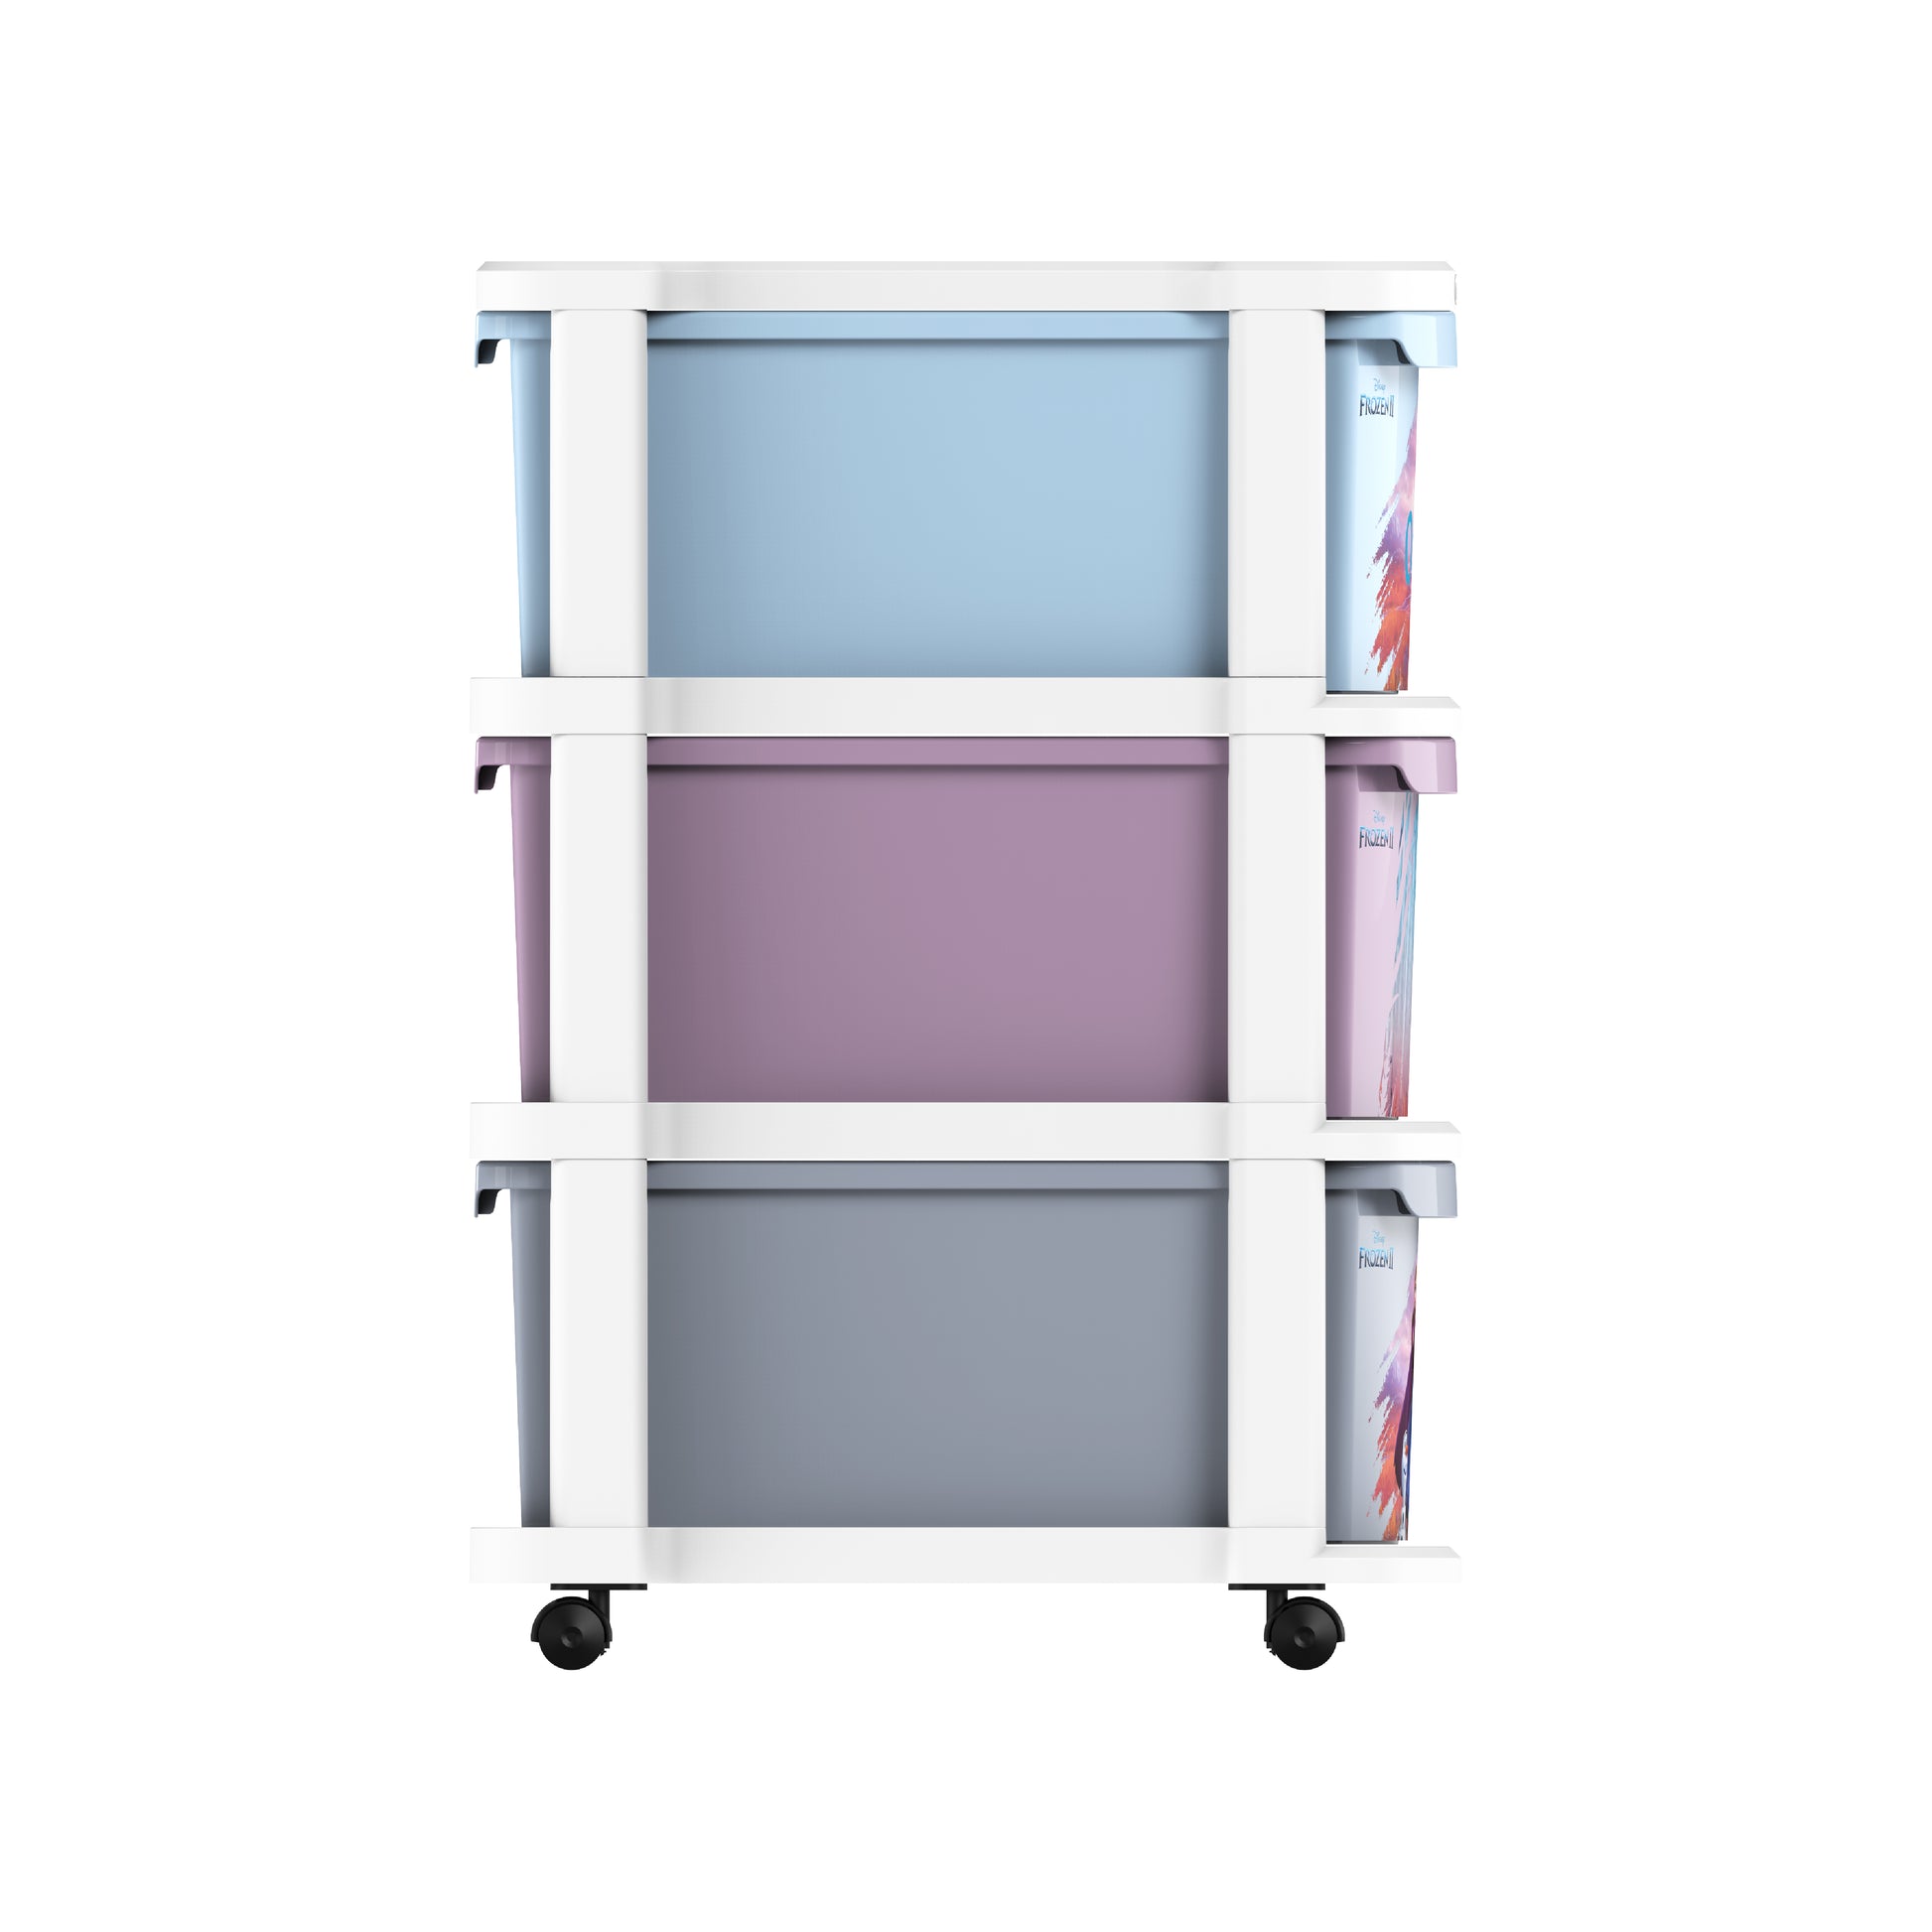 Cosmoplast Disney Frozen Multipurpose Storage Cabinet 3 with Wheels